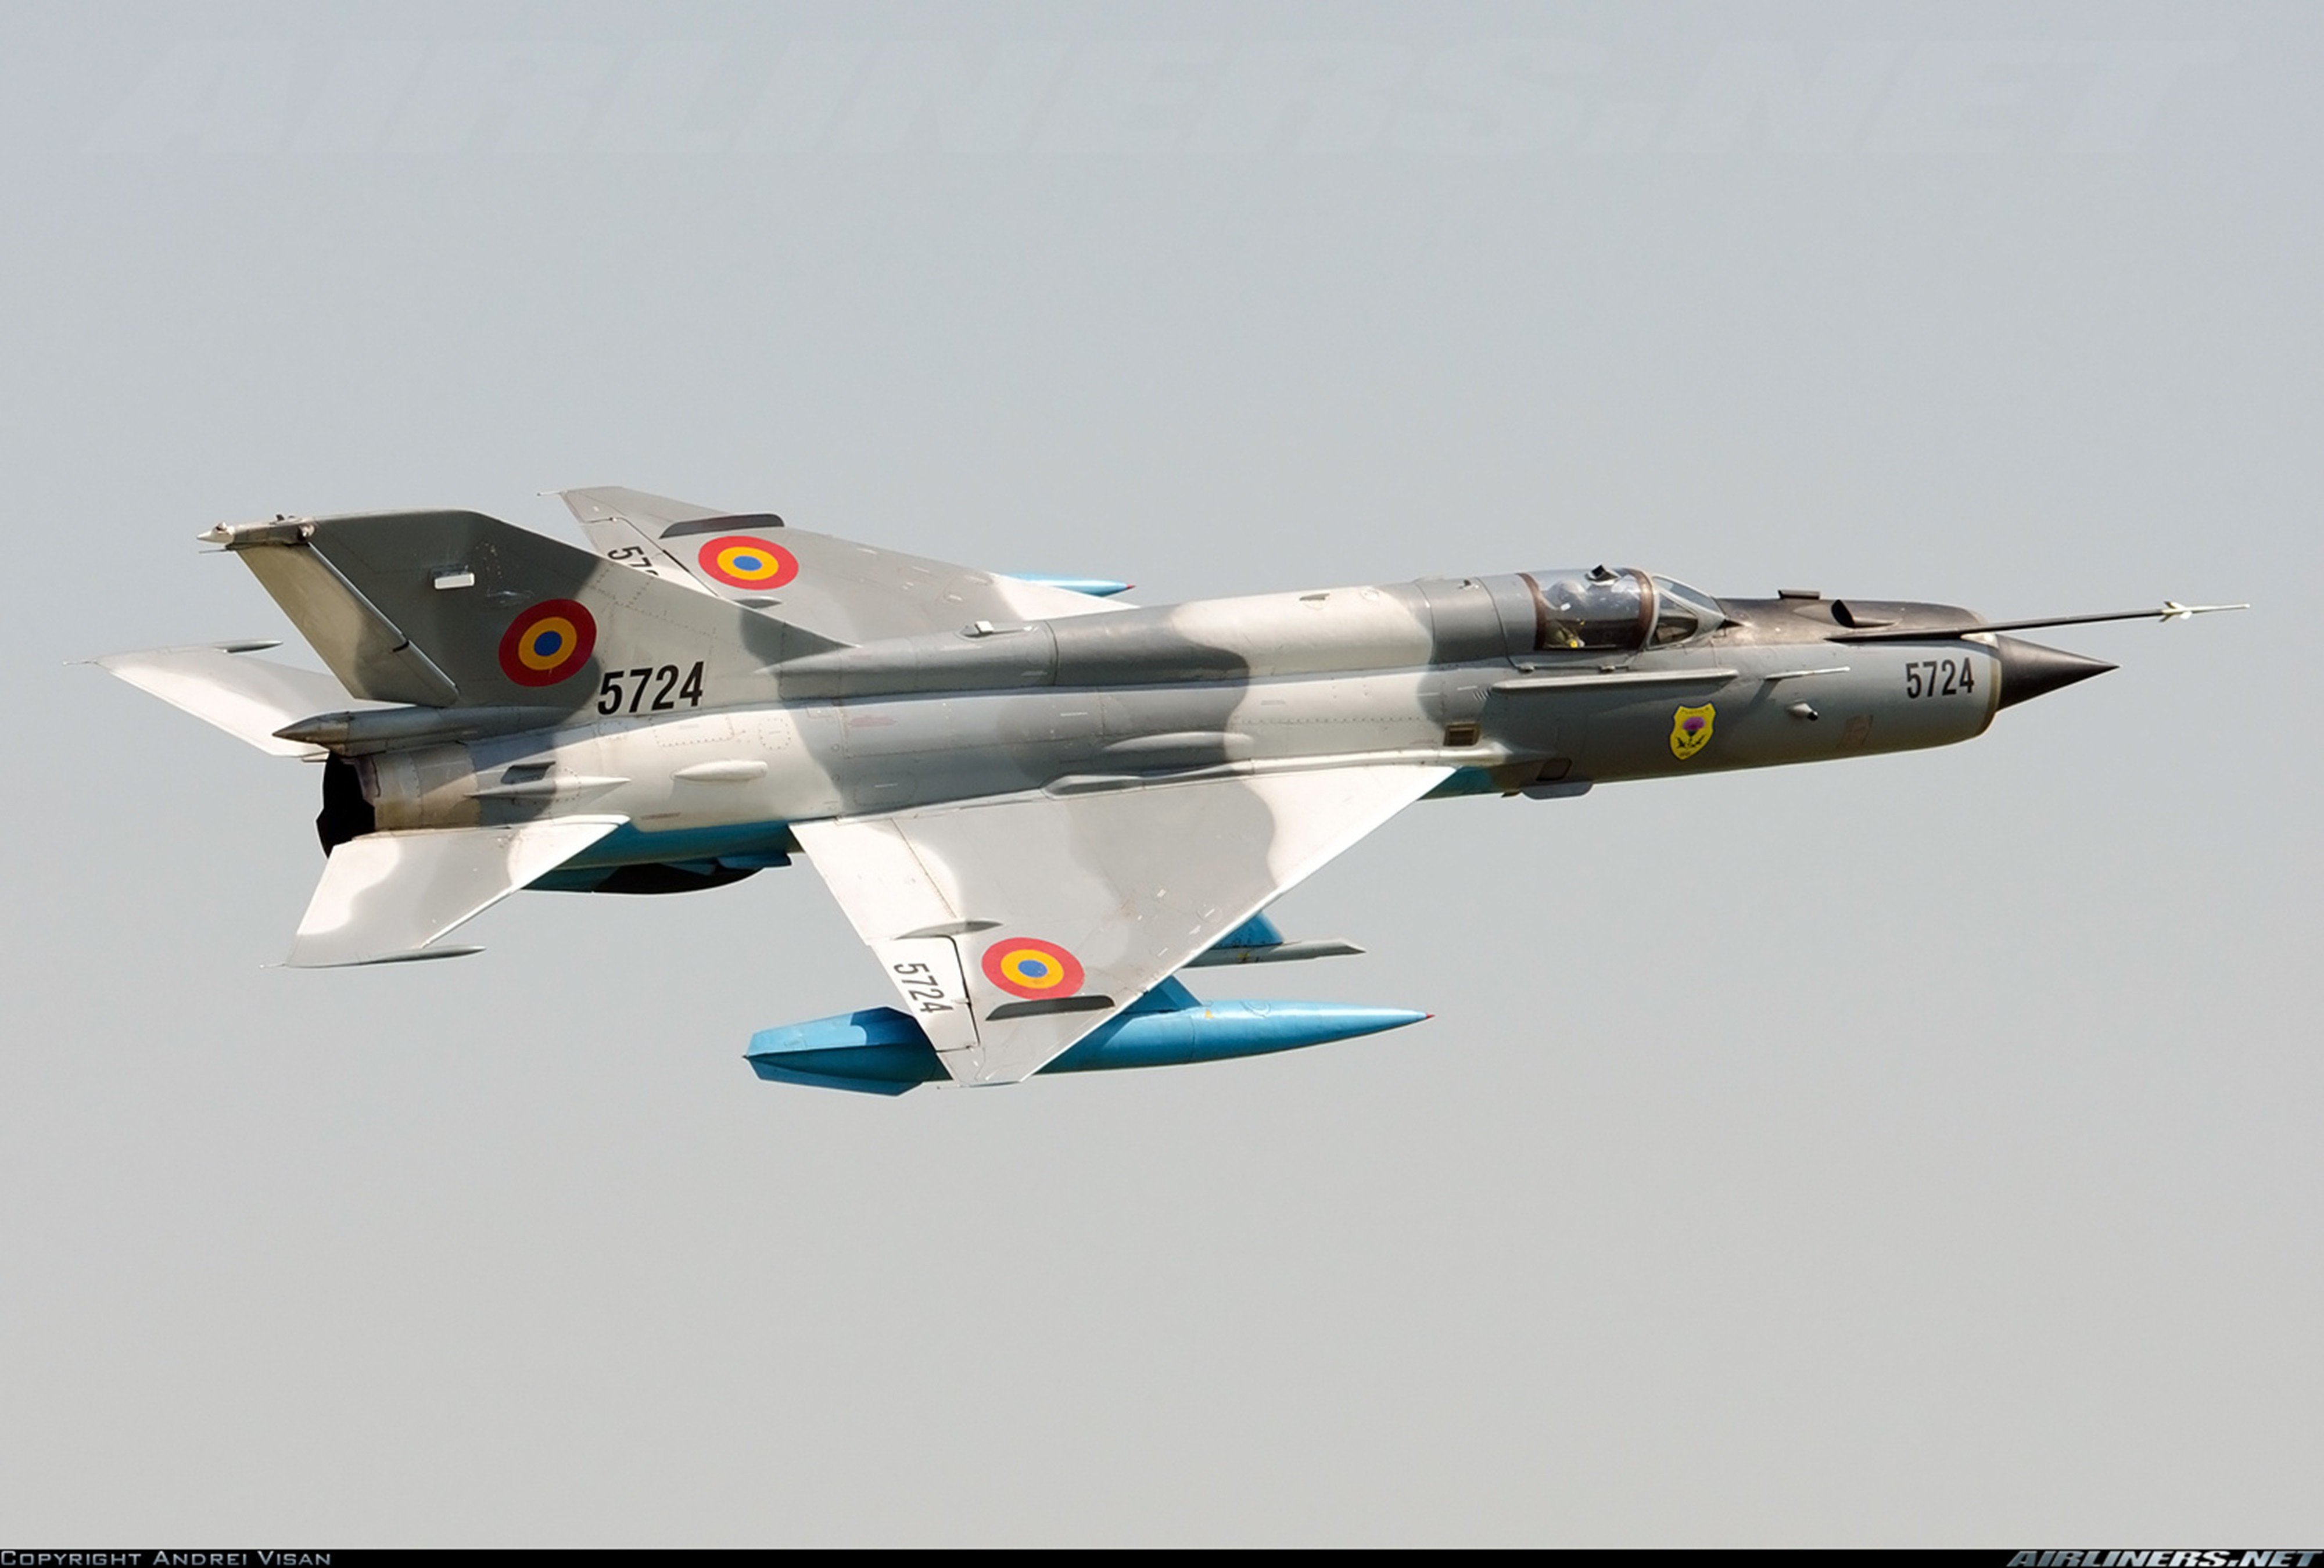 mikoyan, Gurevich, Mig, Jet, Fighter, Air, Force, Aircraft, War, Sky, Romania Wallpaper